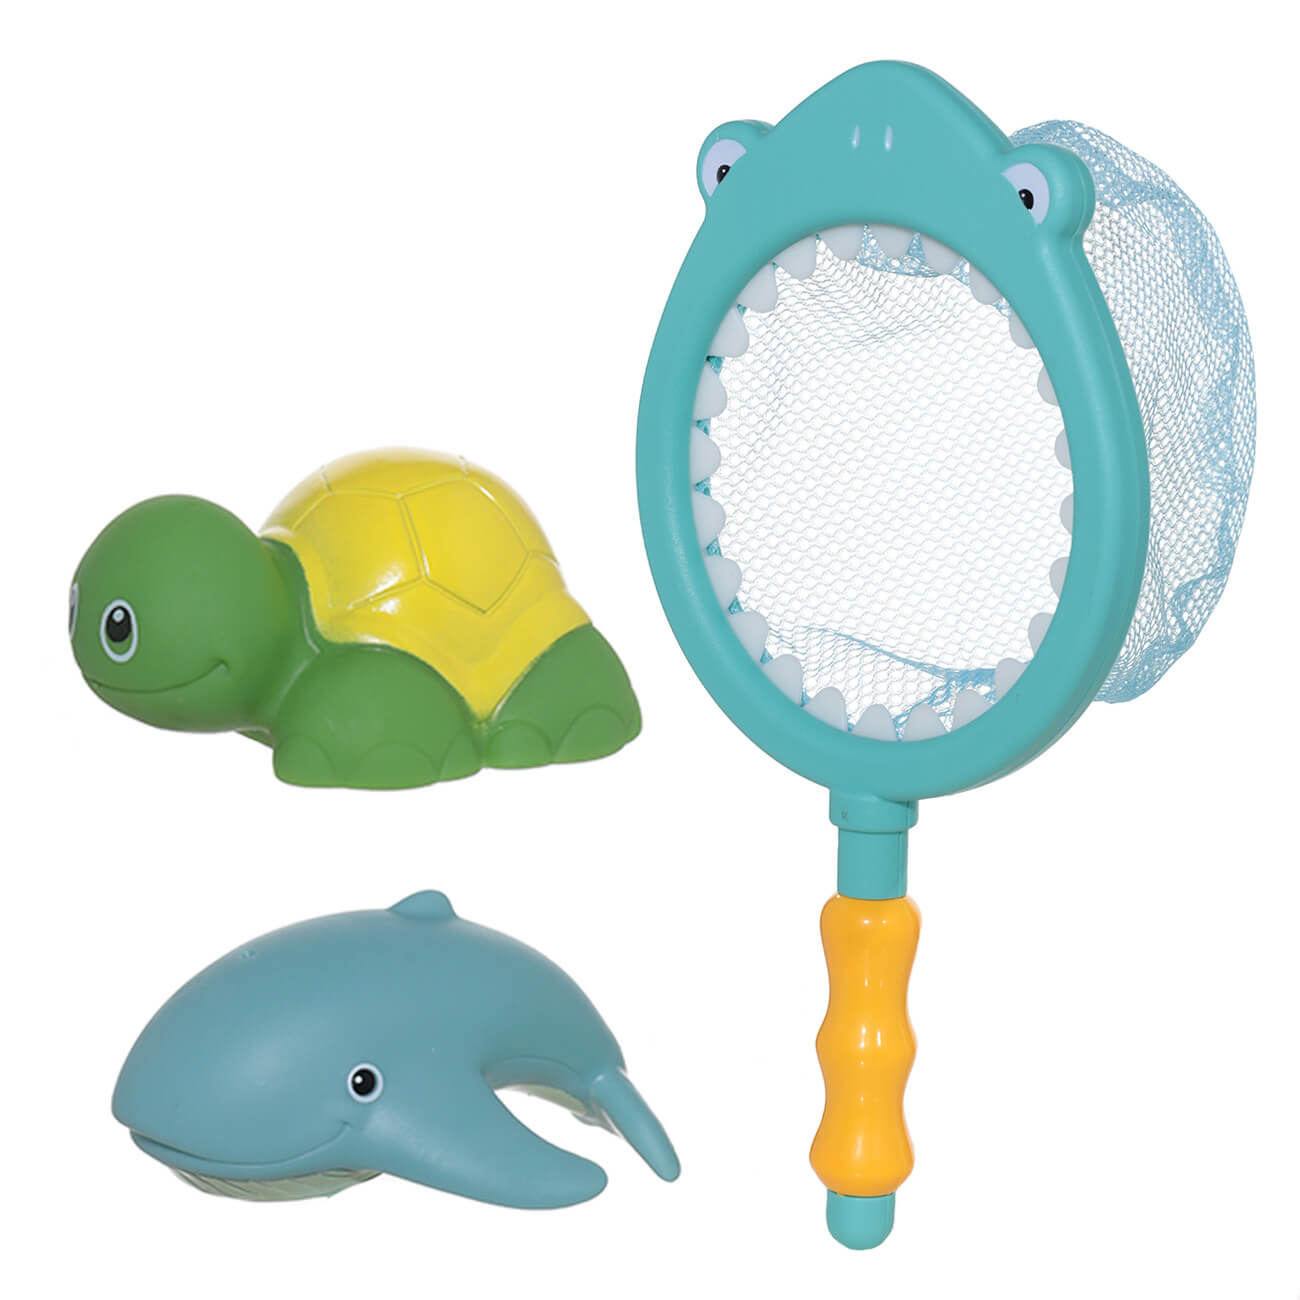 Набор игрушек для купания, 3 пр, сачок/игрушки, резина/пластик, Акула, Aquatic animals сустав для игрушек размер 1 шт 15 мм набор 10 шт